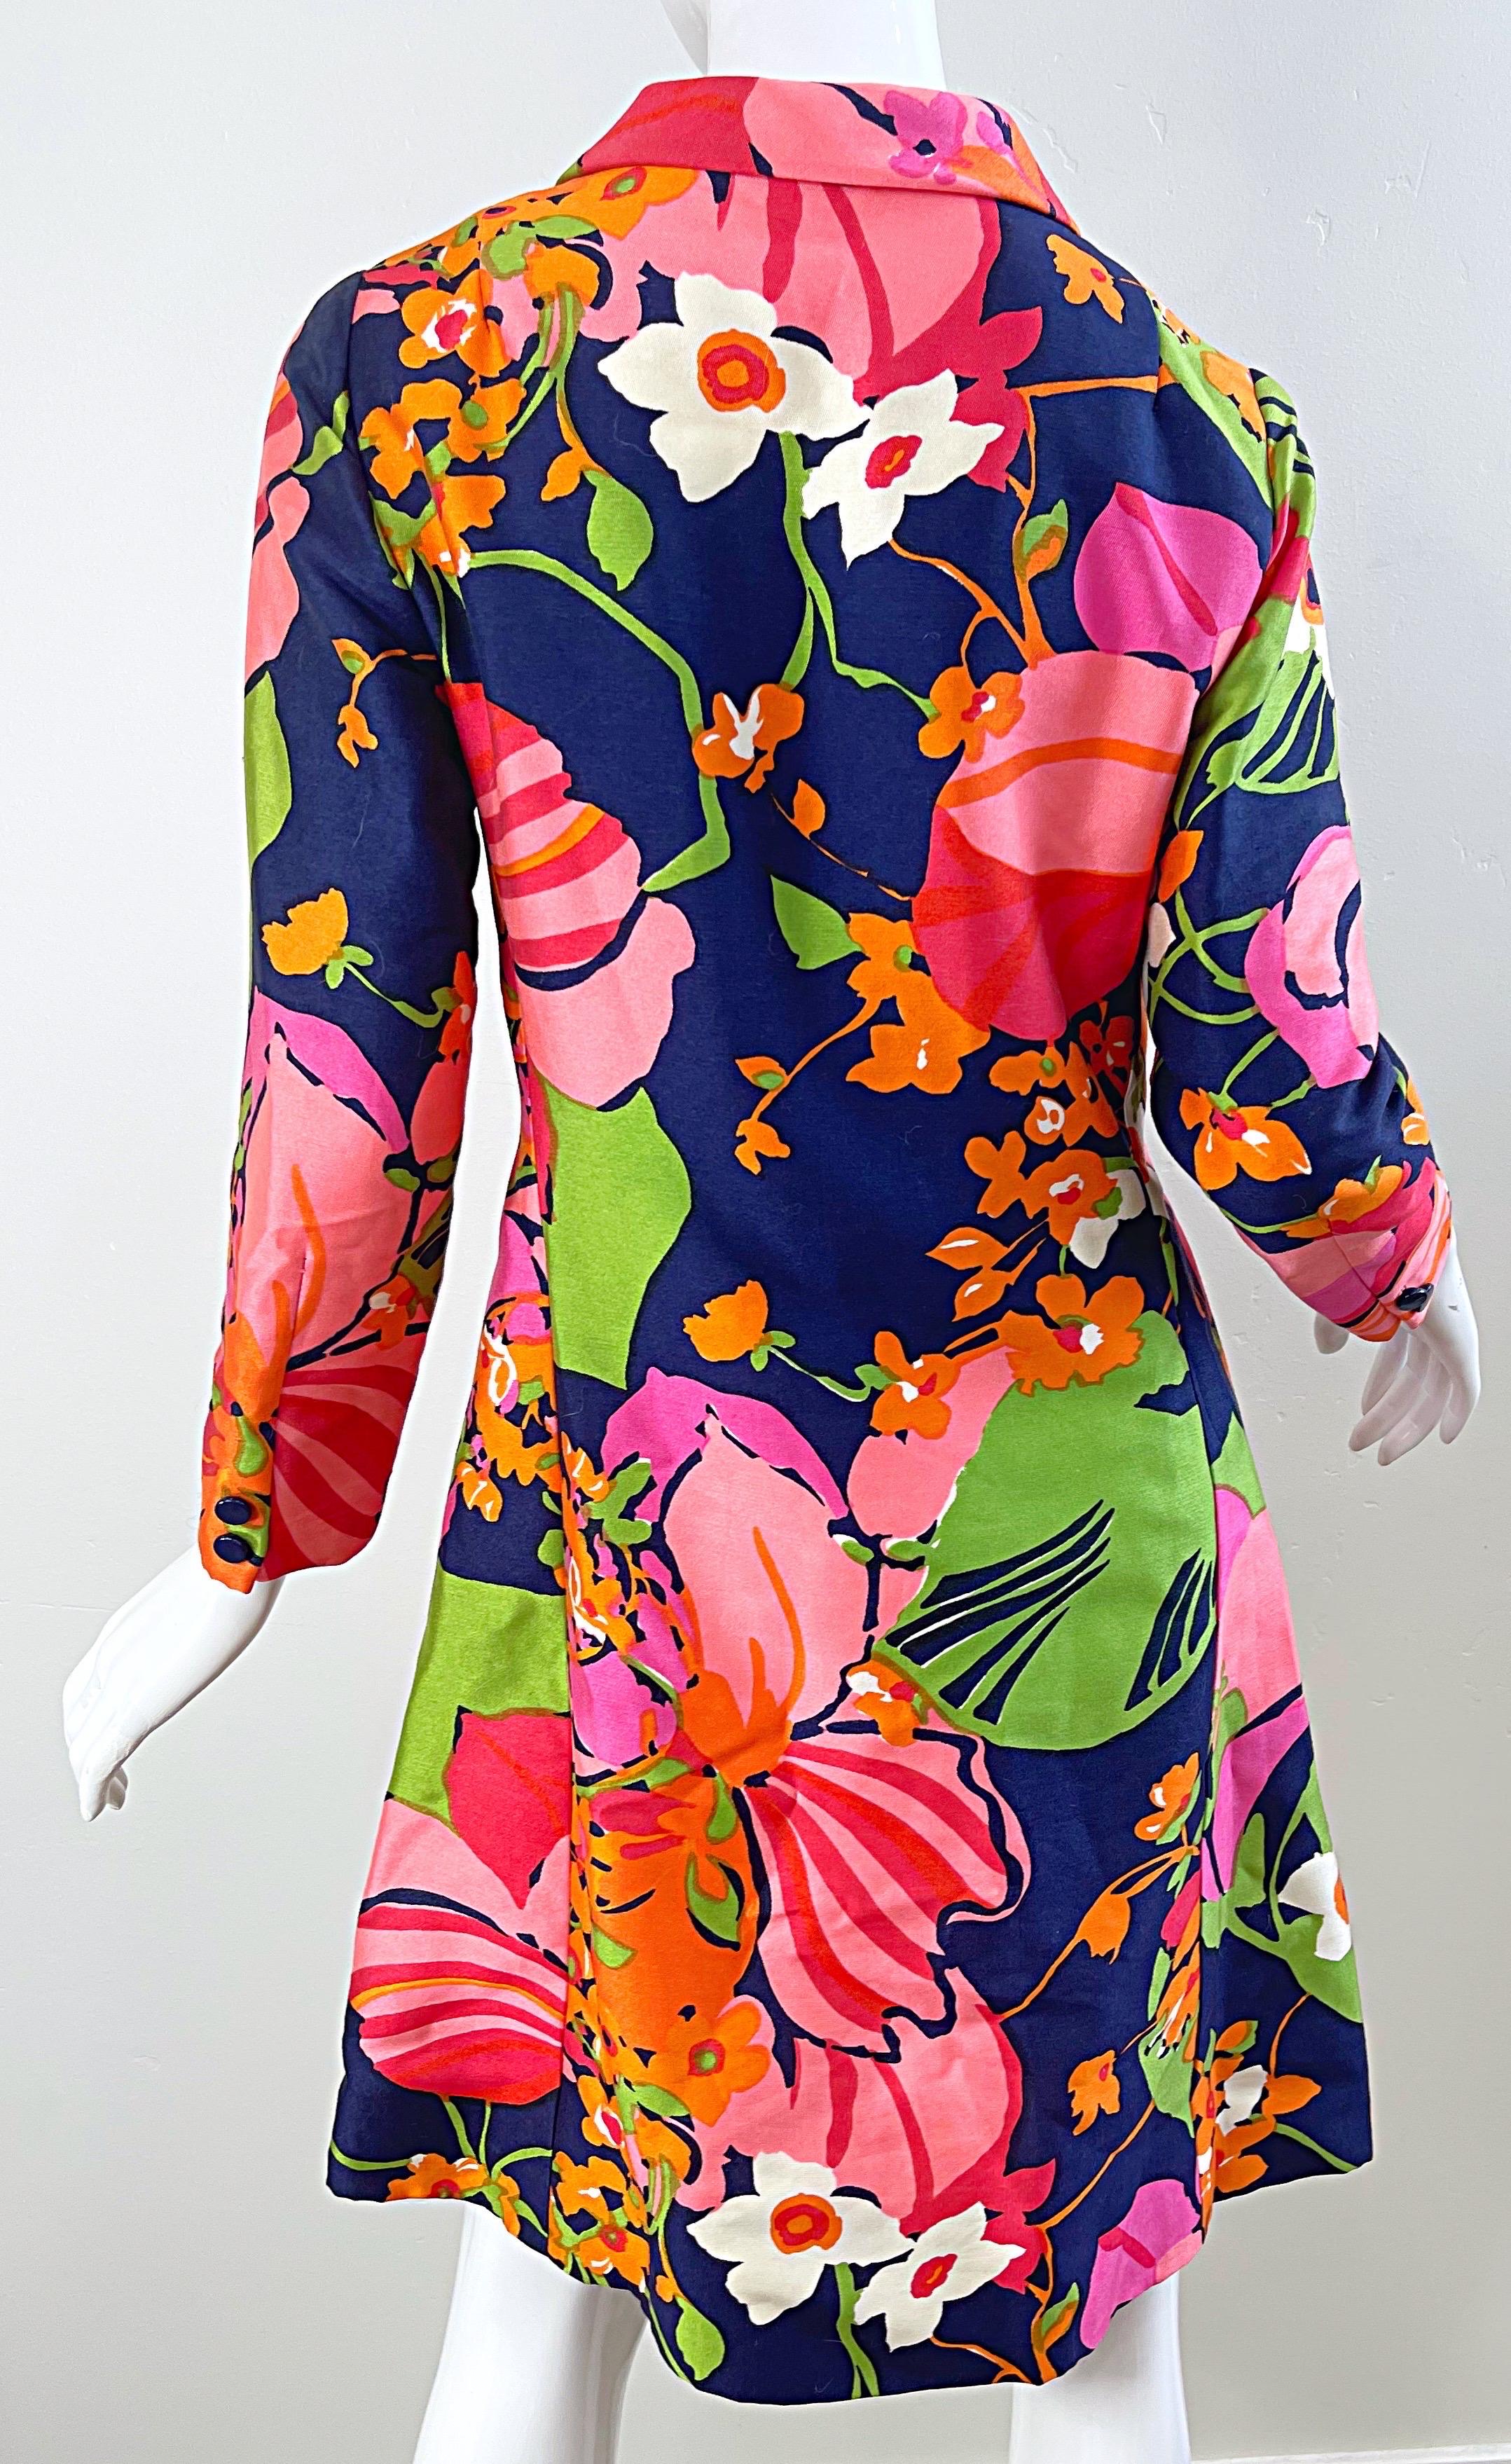 Women's Saks 5th Avenue 1960s Mod Retro Abstract Flower Print Vintage 60s Silk Dress